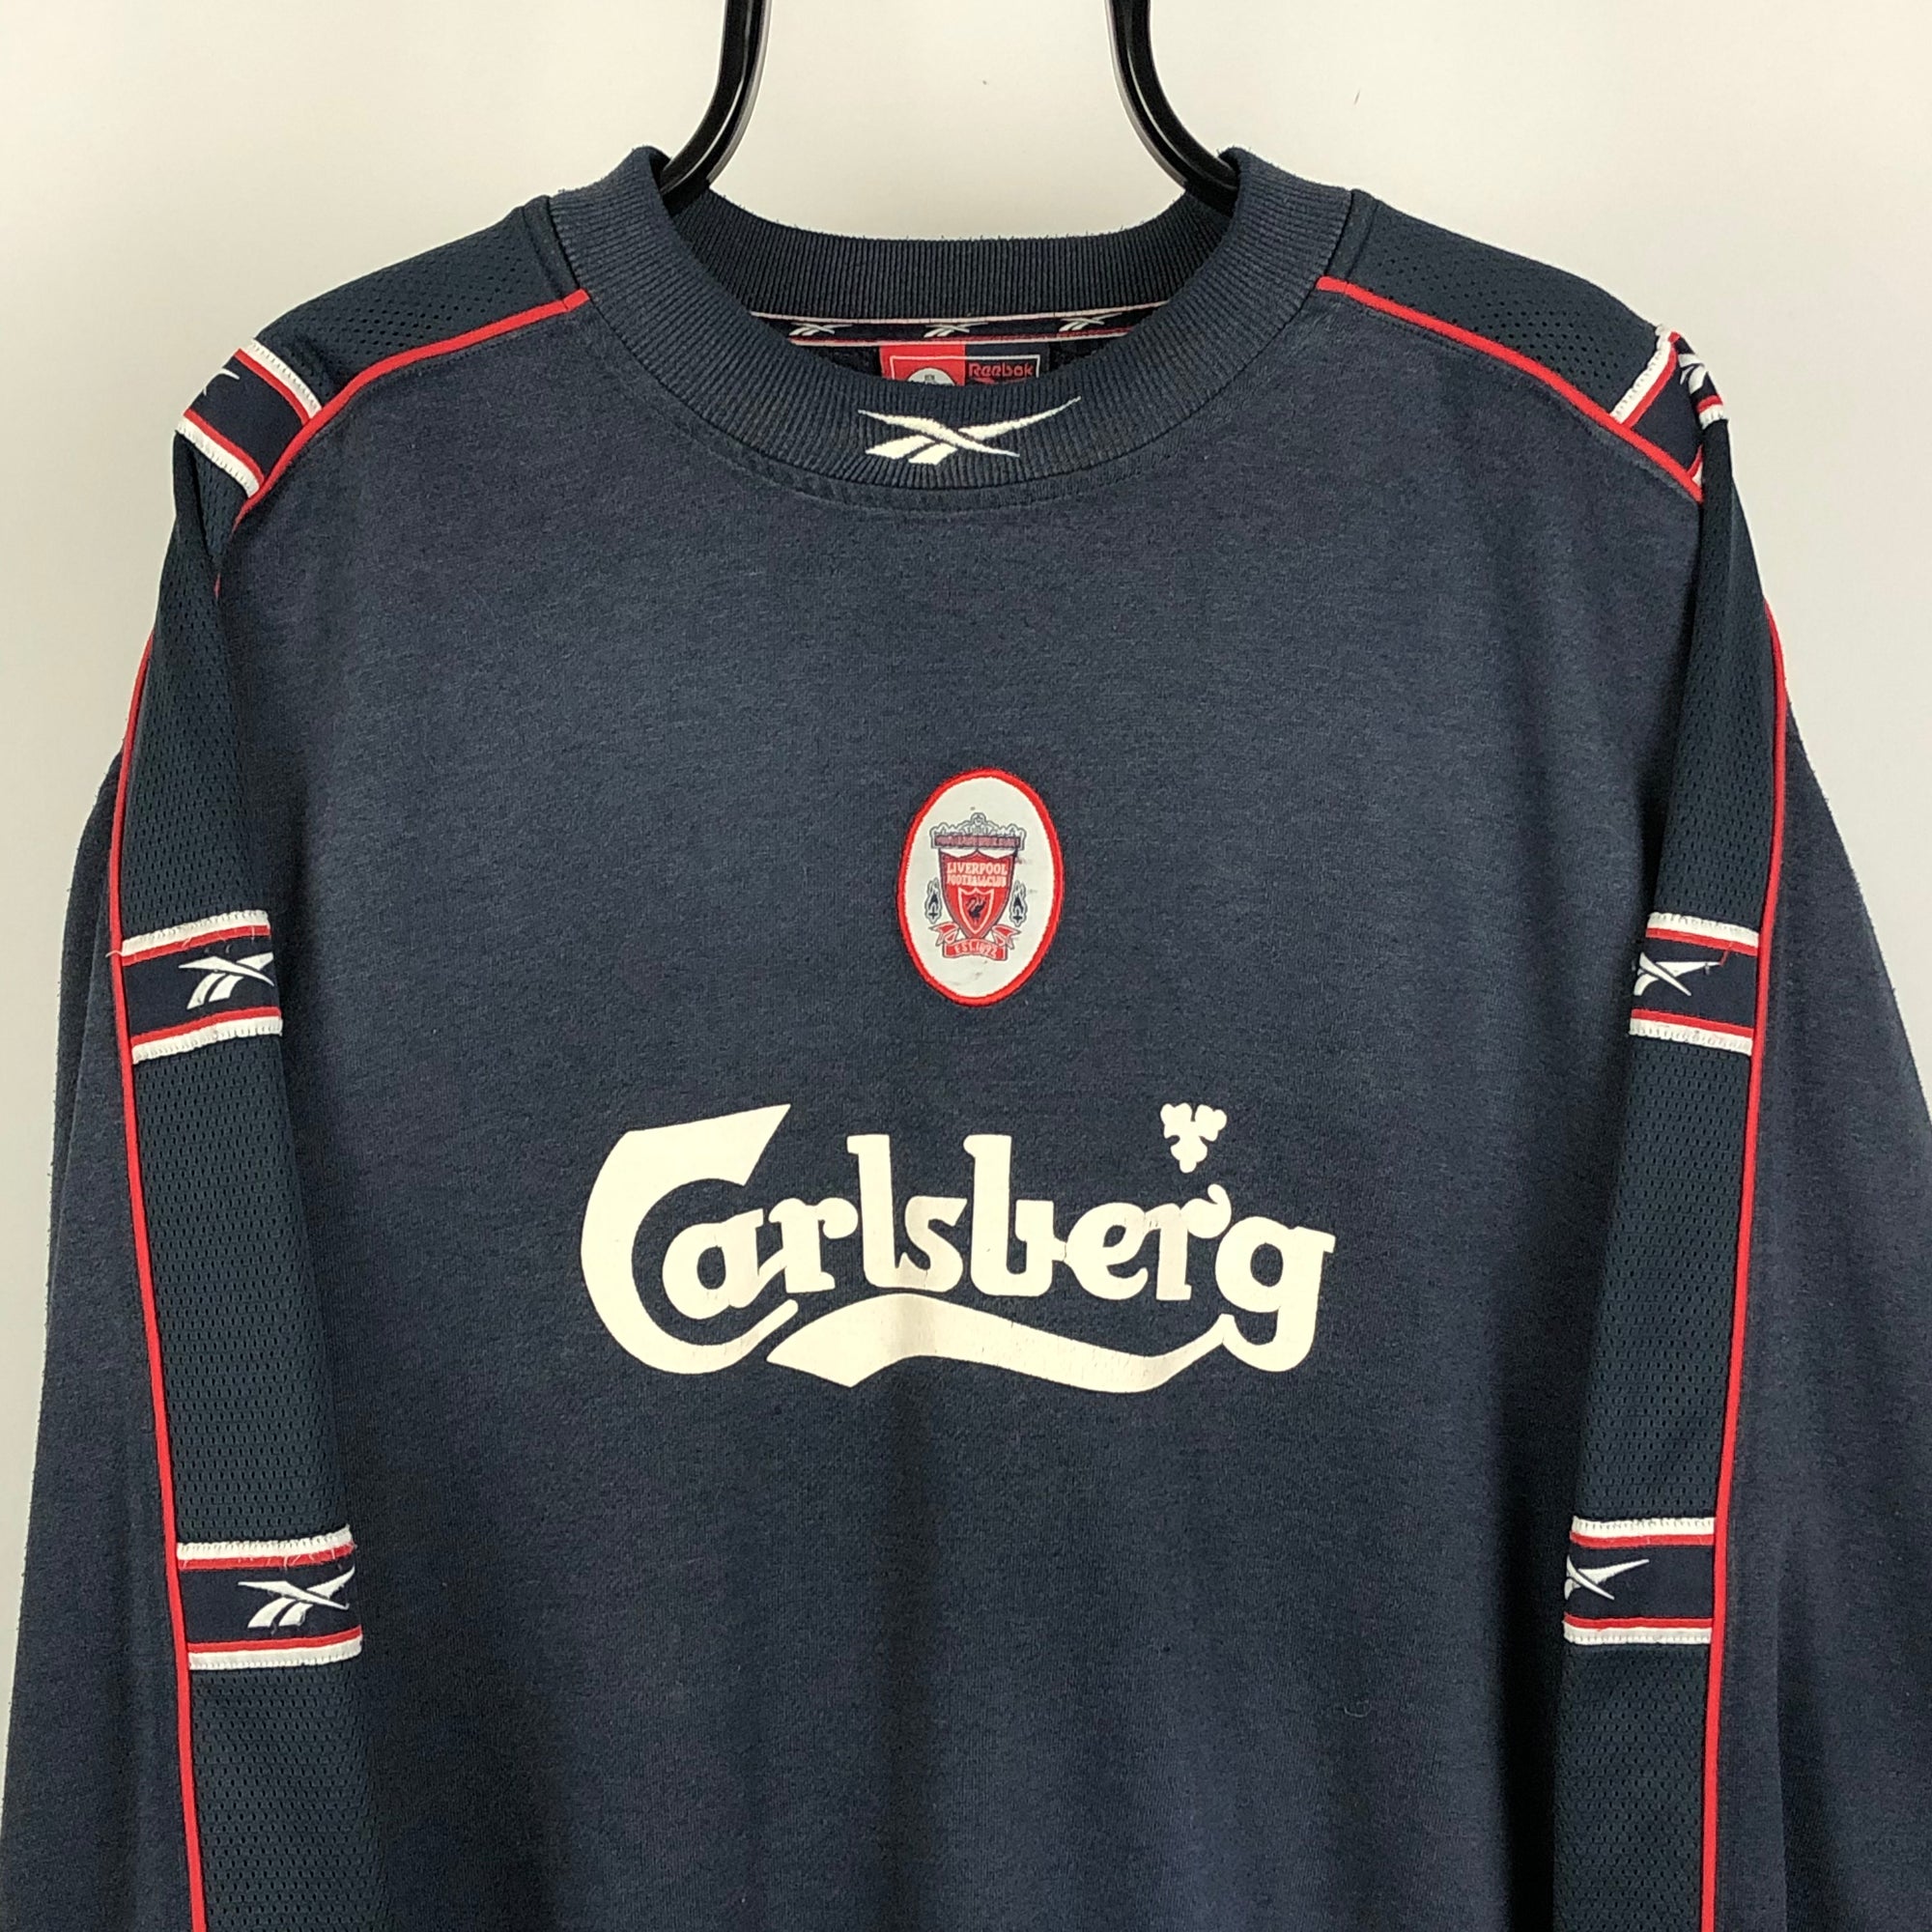 Vintage 90s Official Liverpool FC Reebok Sweatshirt - Men's Large/Women's XL